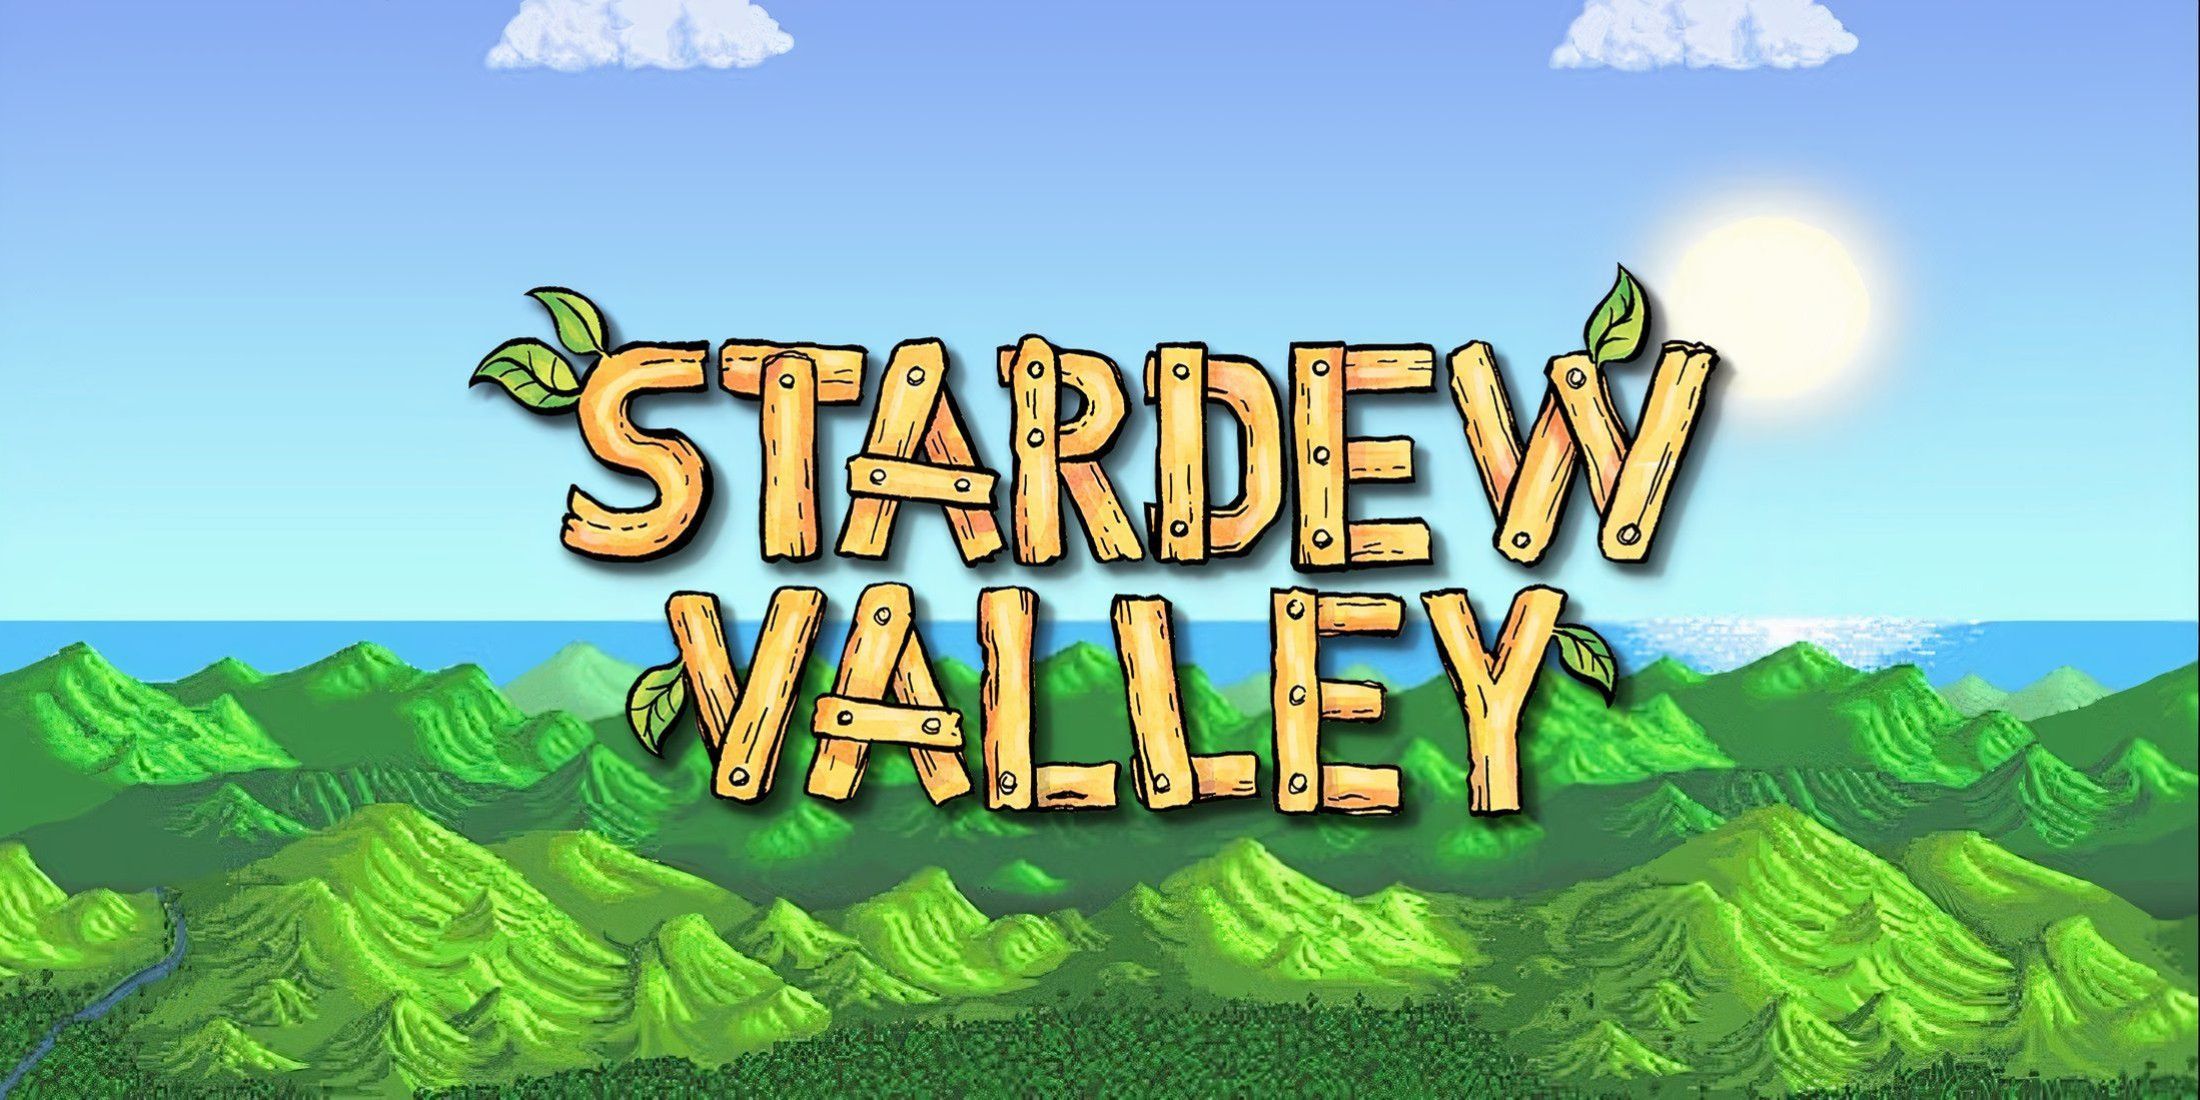 stardew-valley-logo-title-screen-1